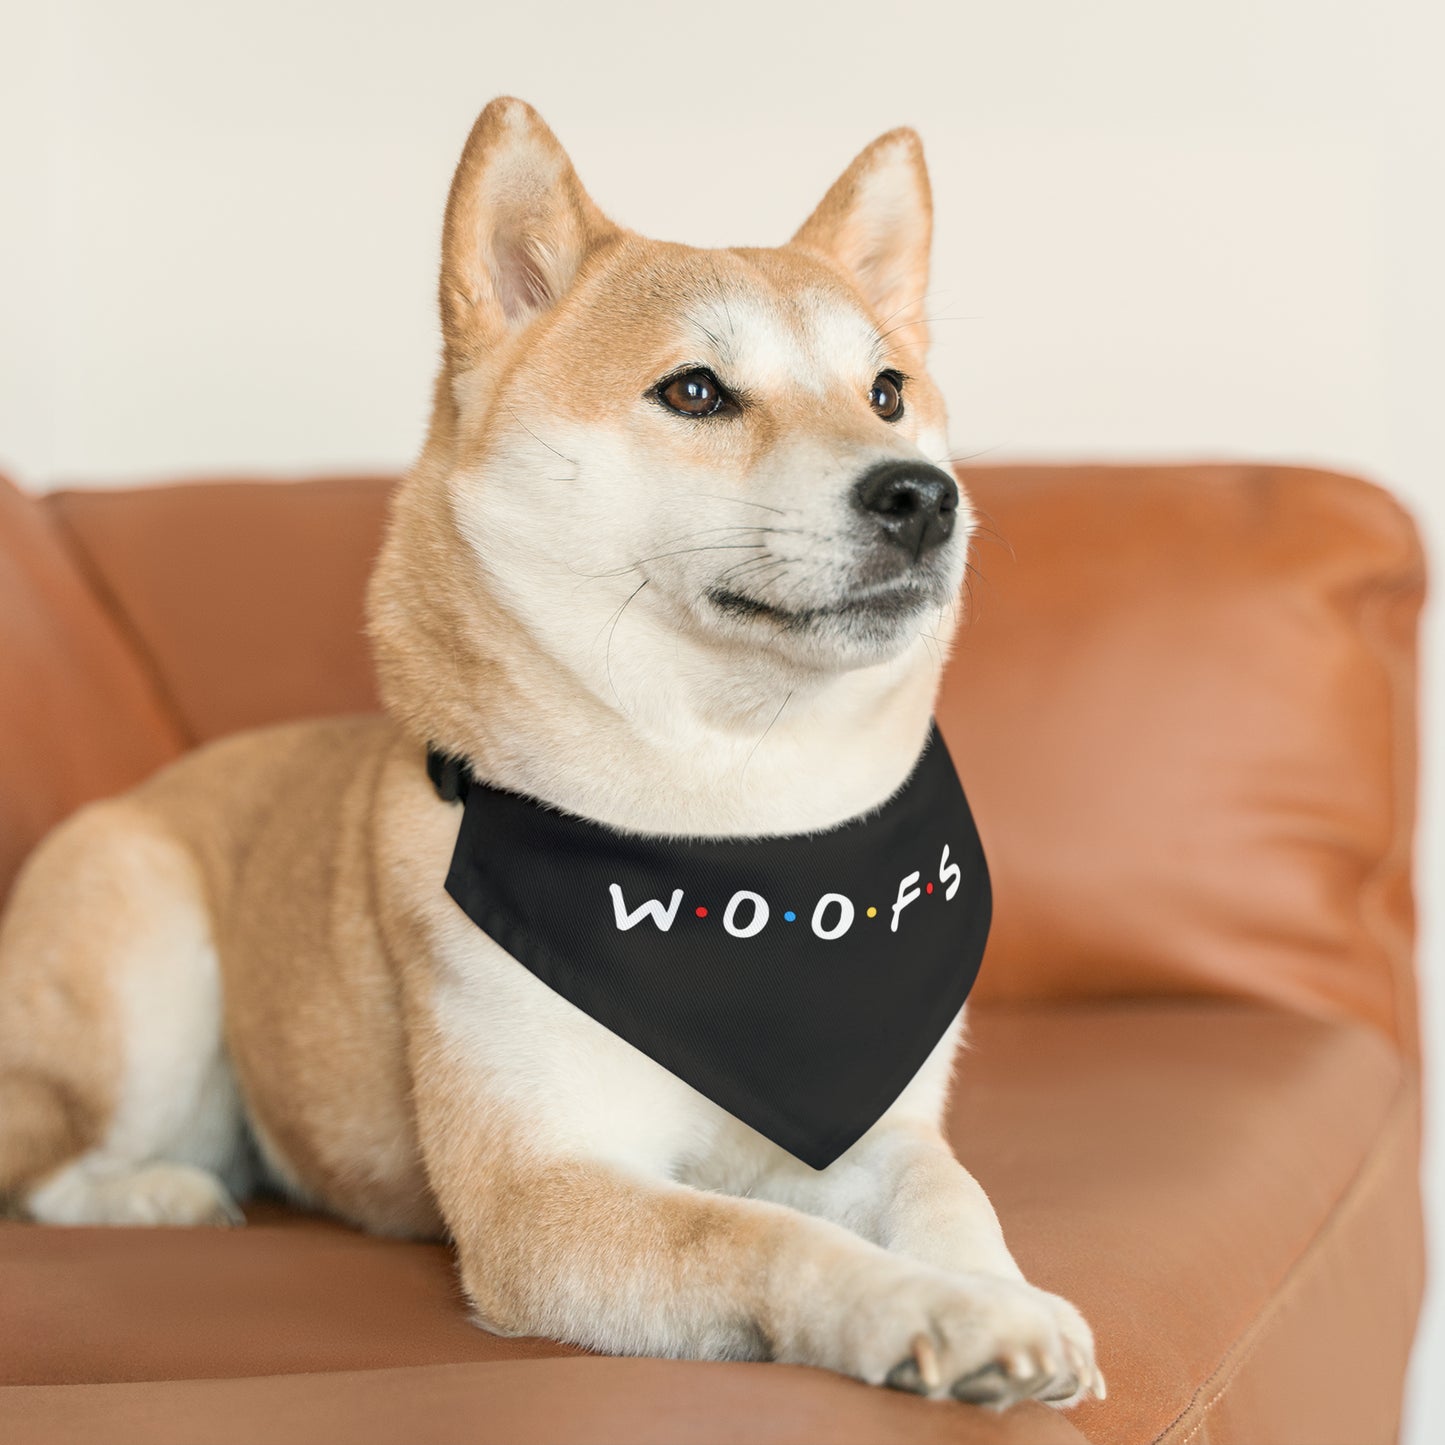 Woofs (Friends Style) Pet Bandana Collar